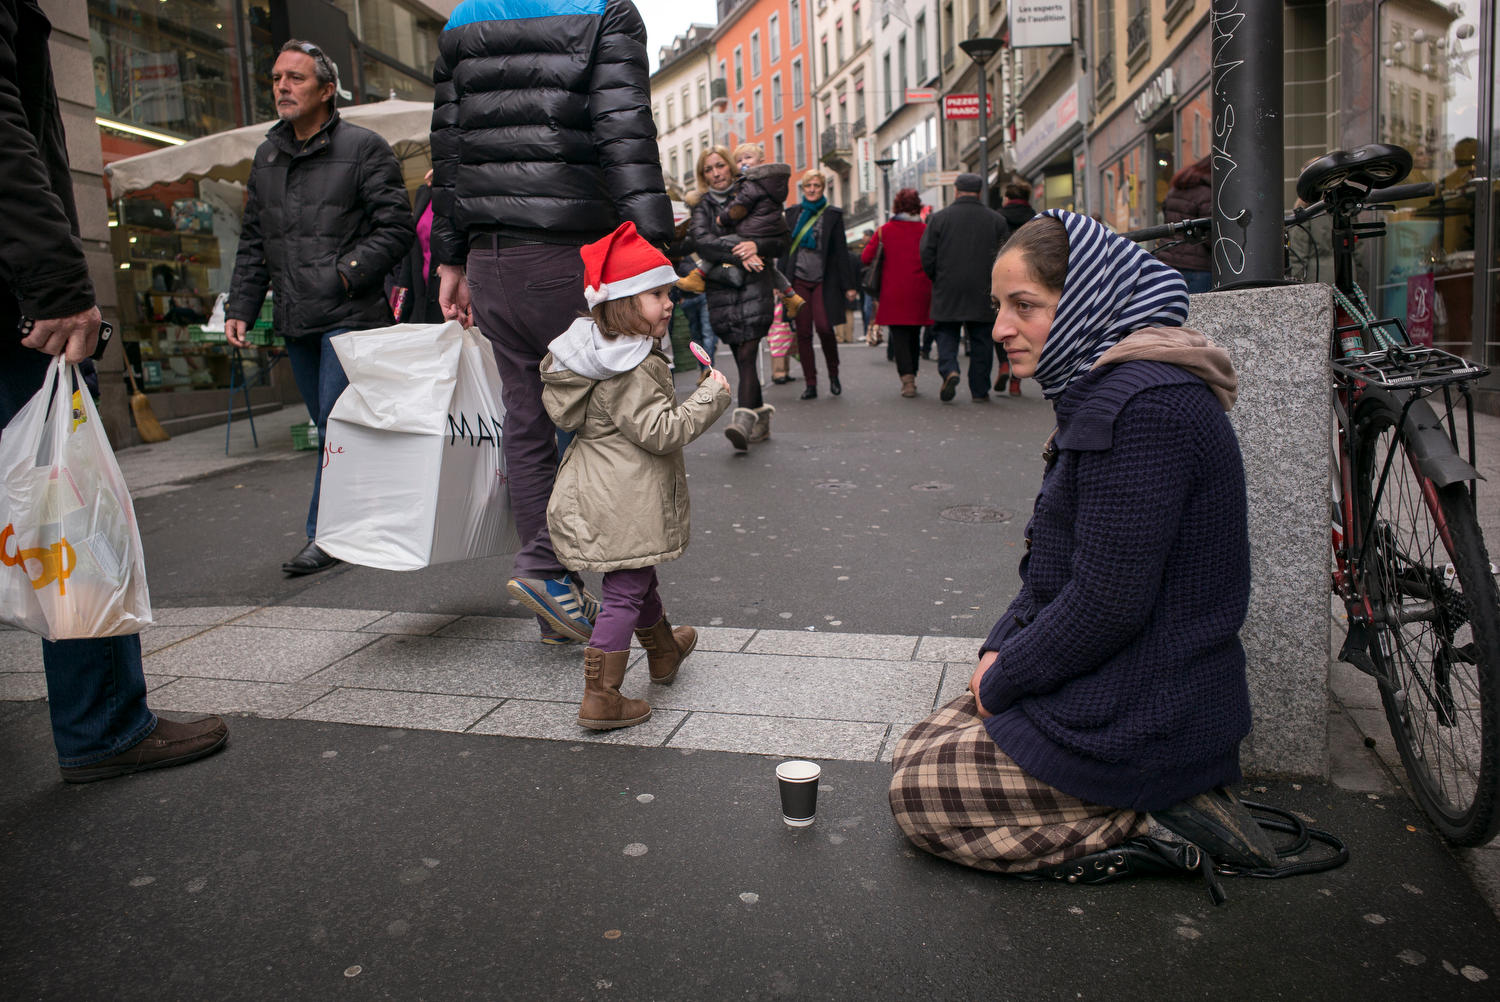 Woman begging on street